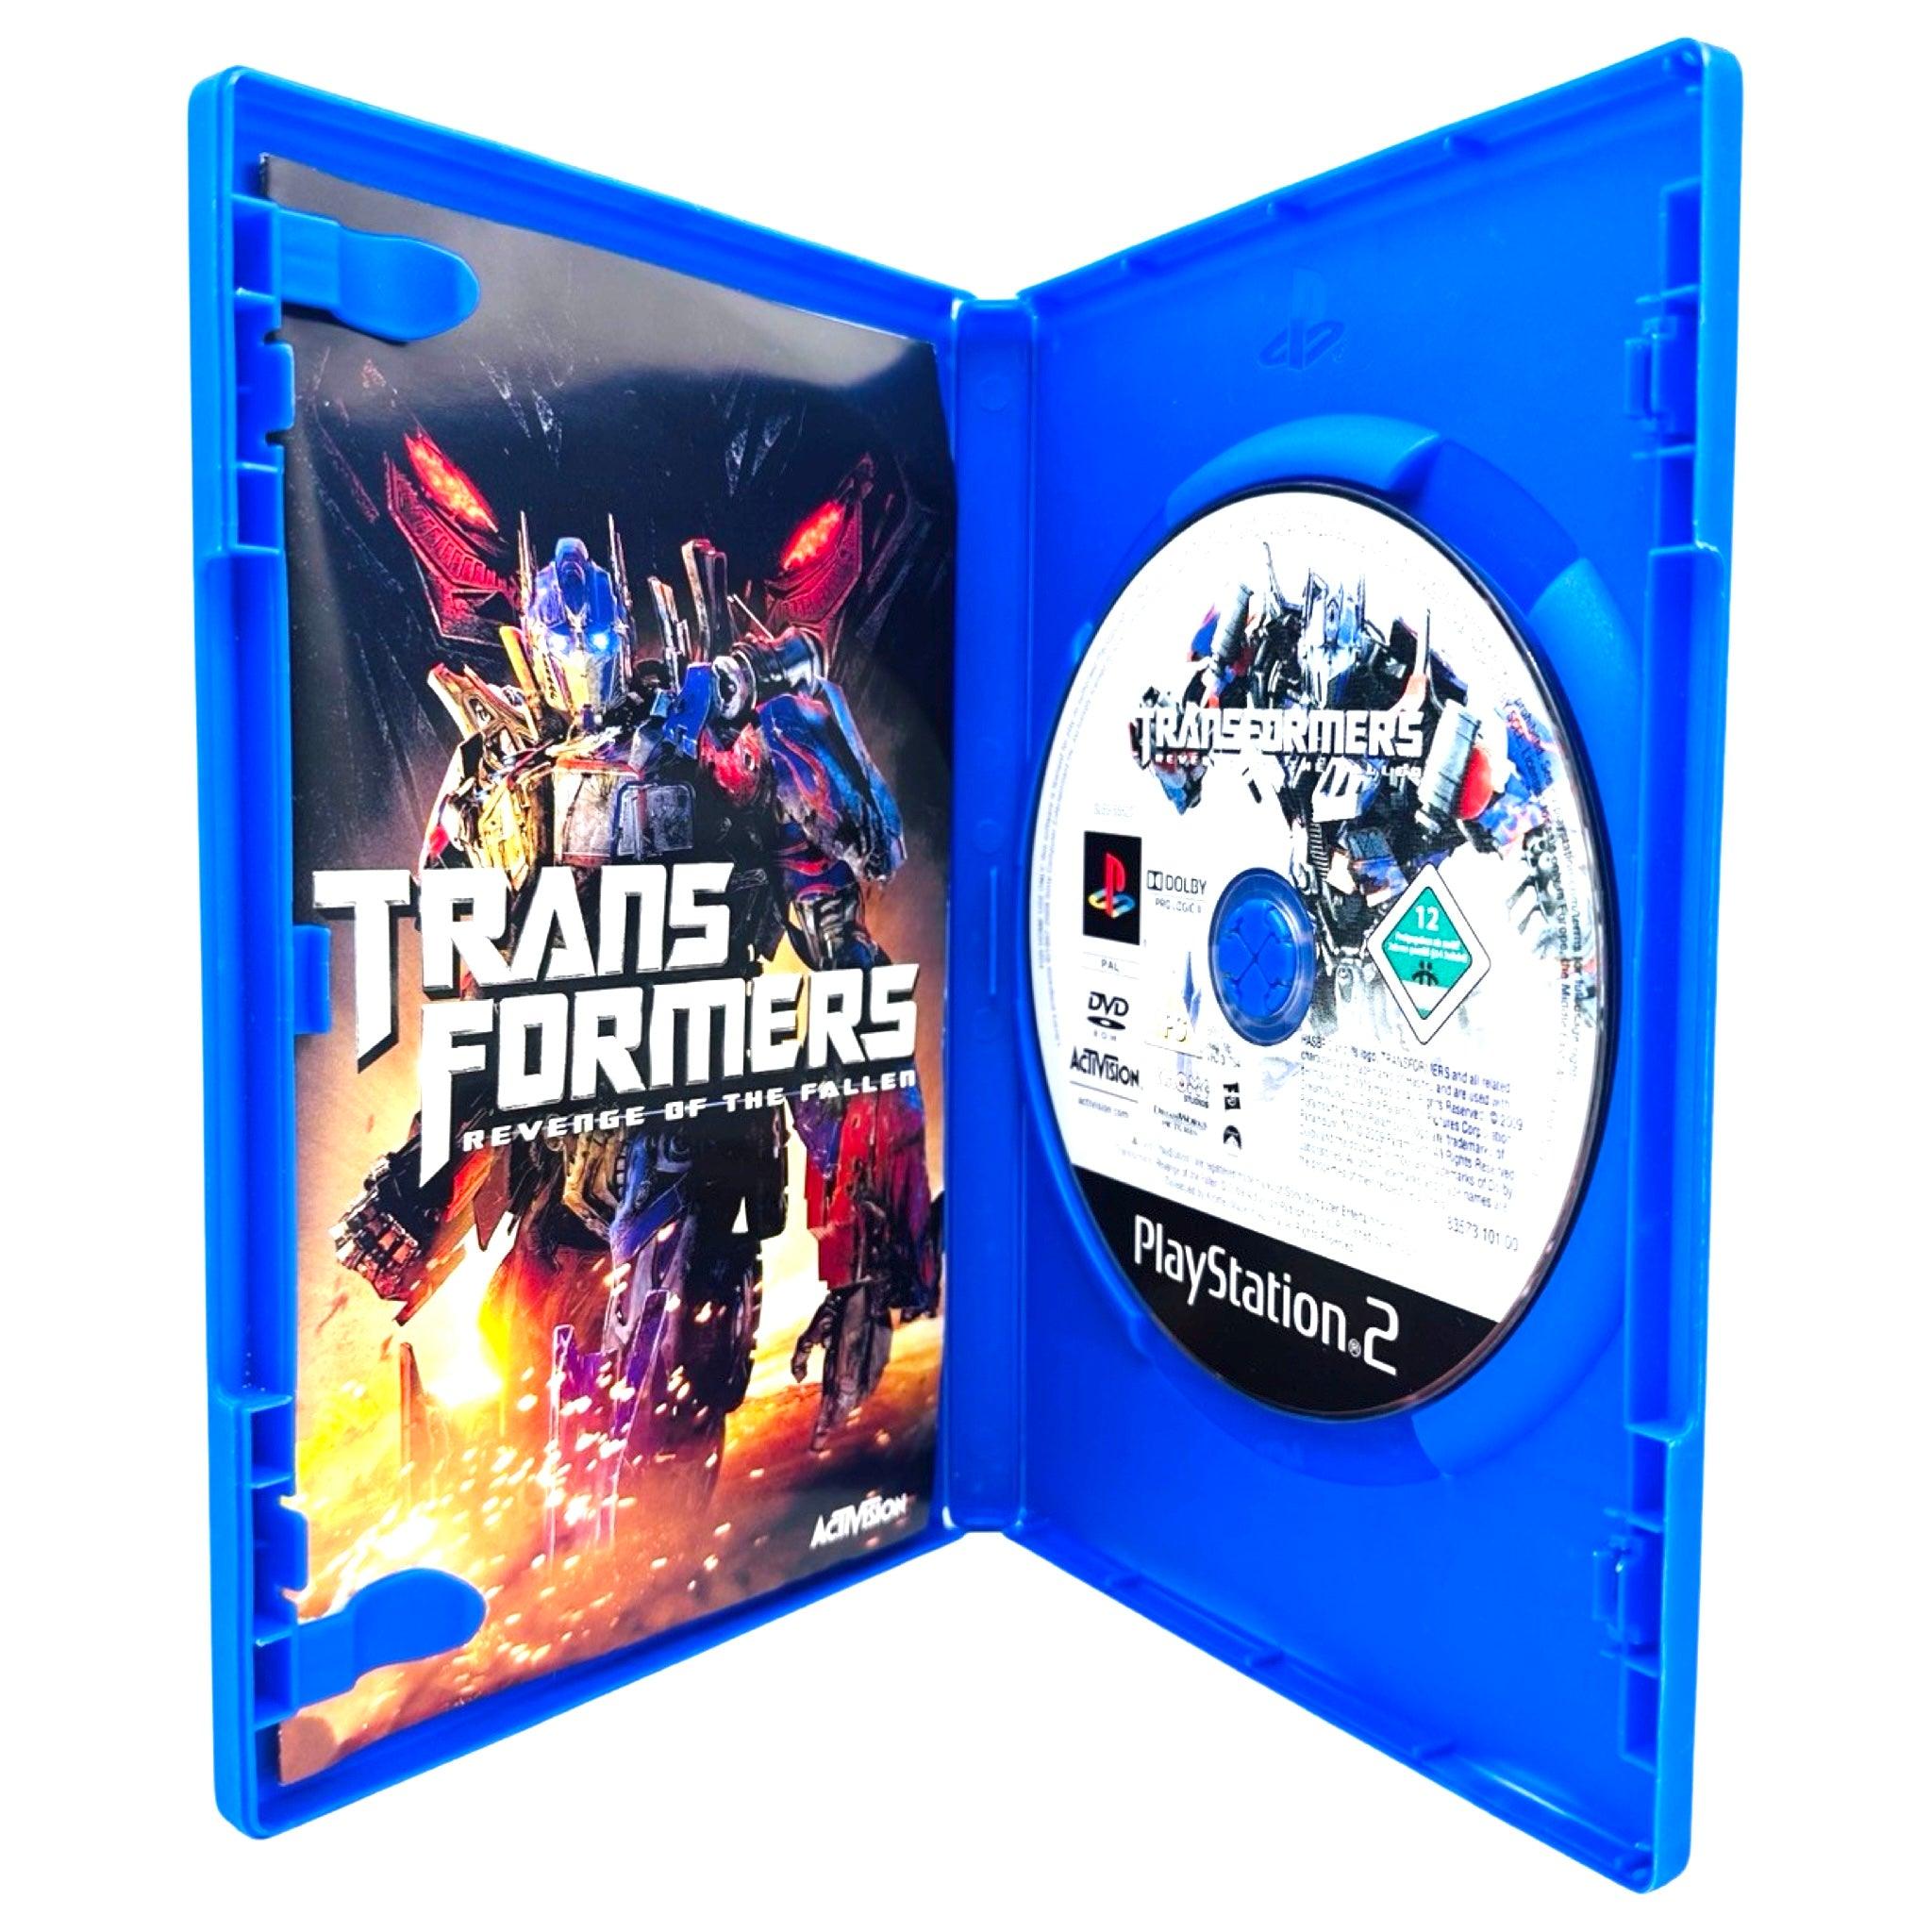 PS2: Transformers: Revenge Of The Fallen - RetroGaming.No